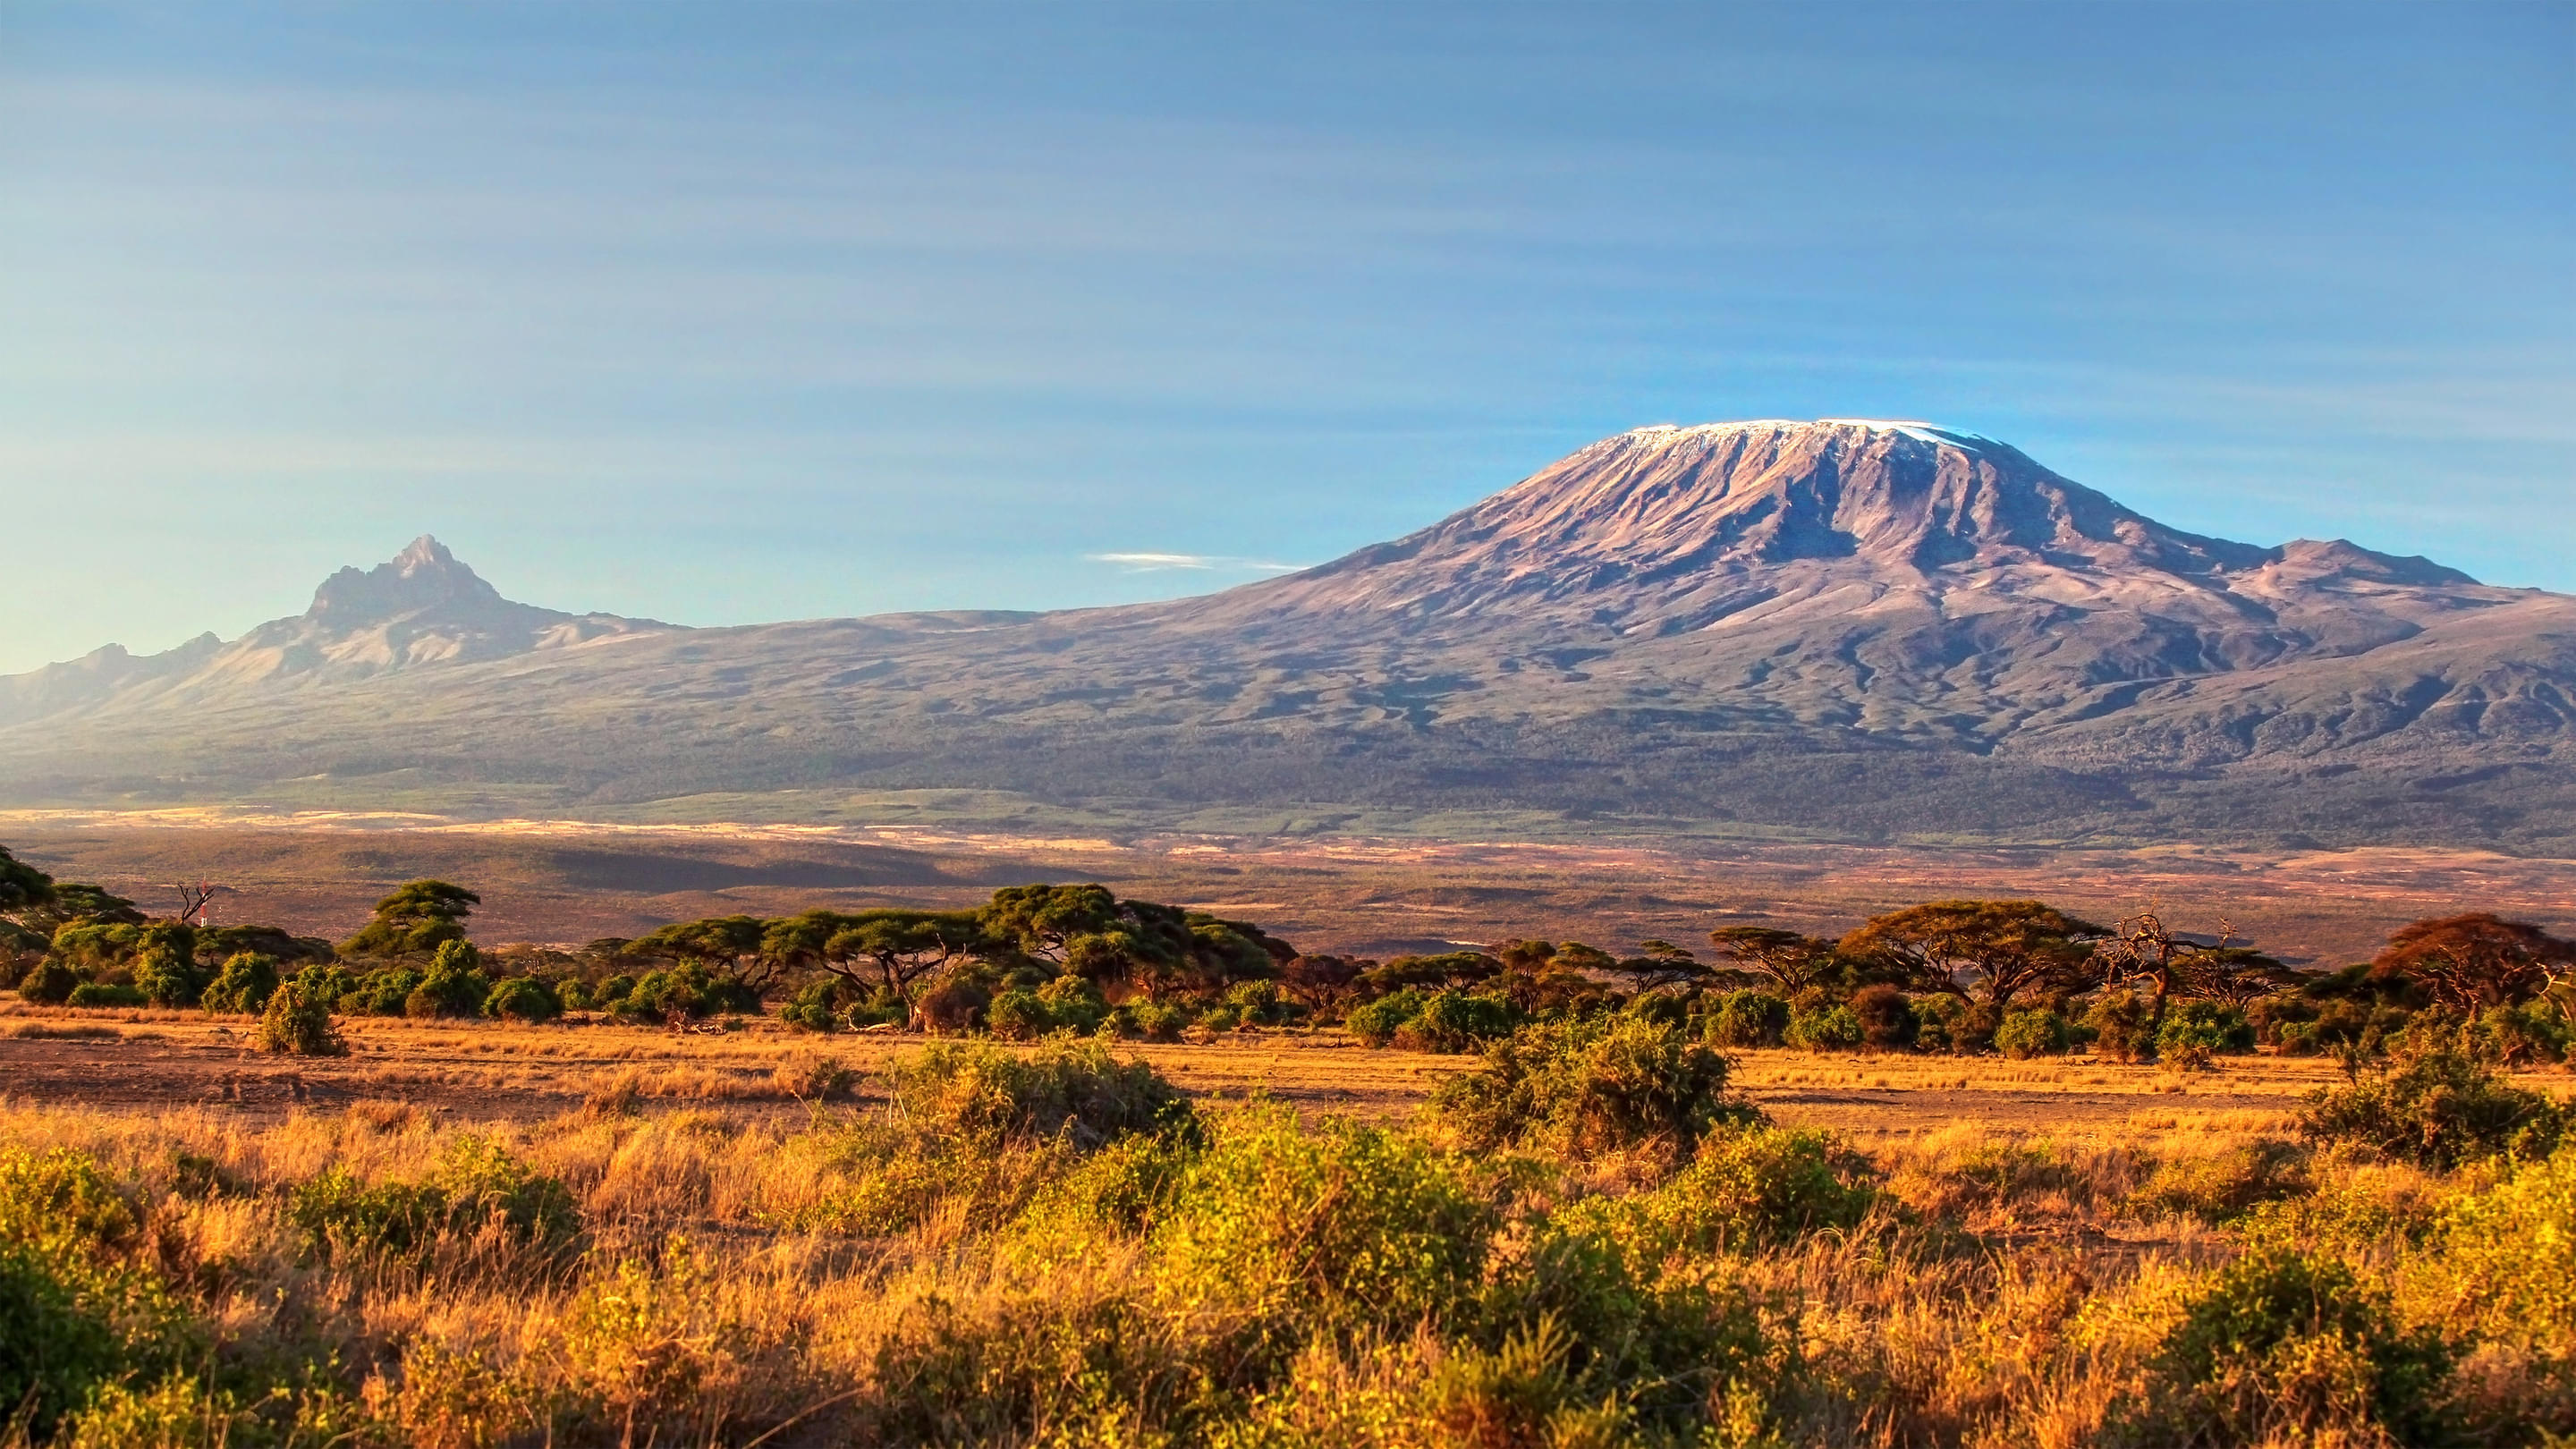 Mount Kilimanjaro Overview